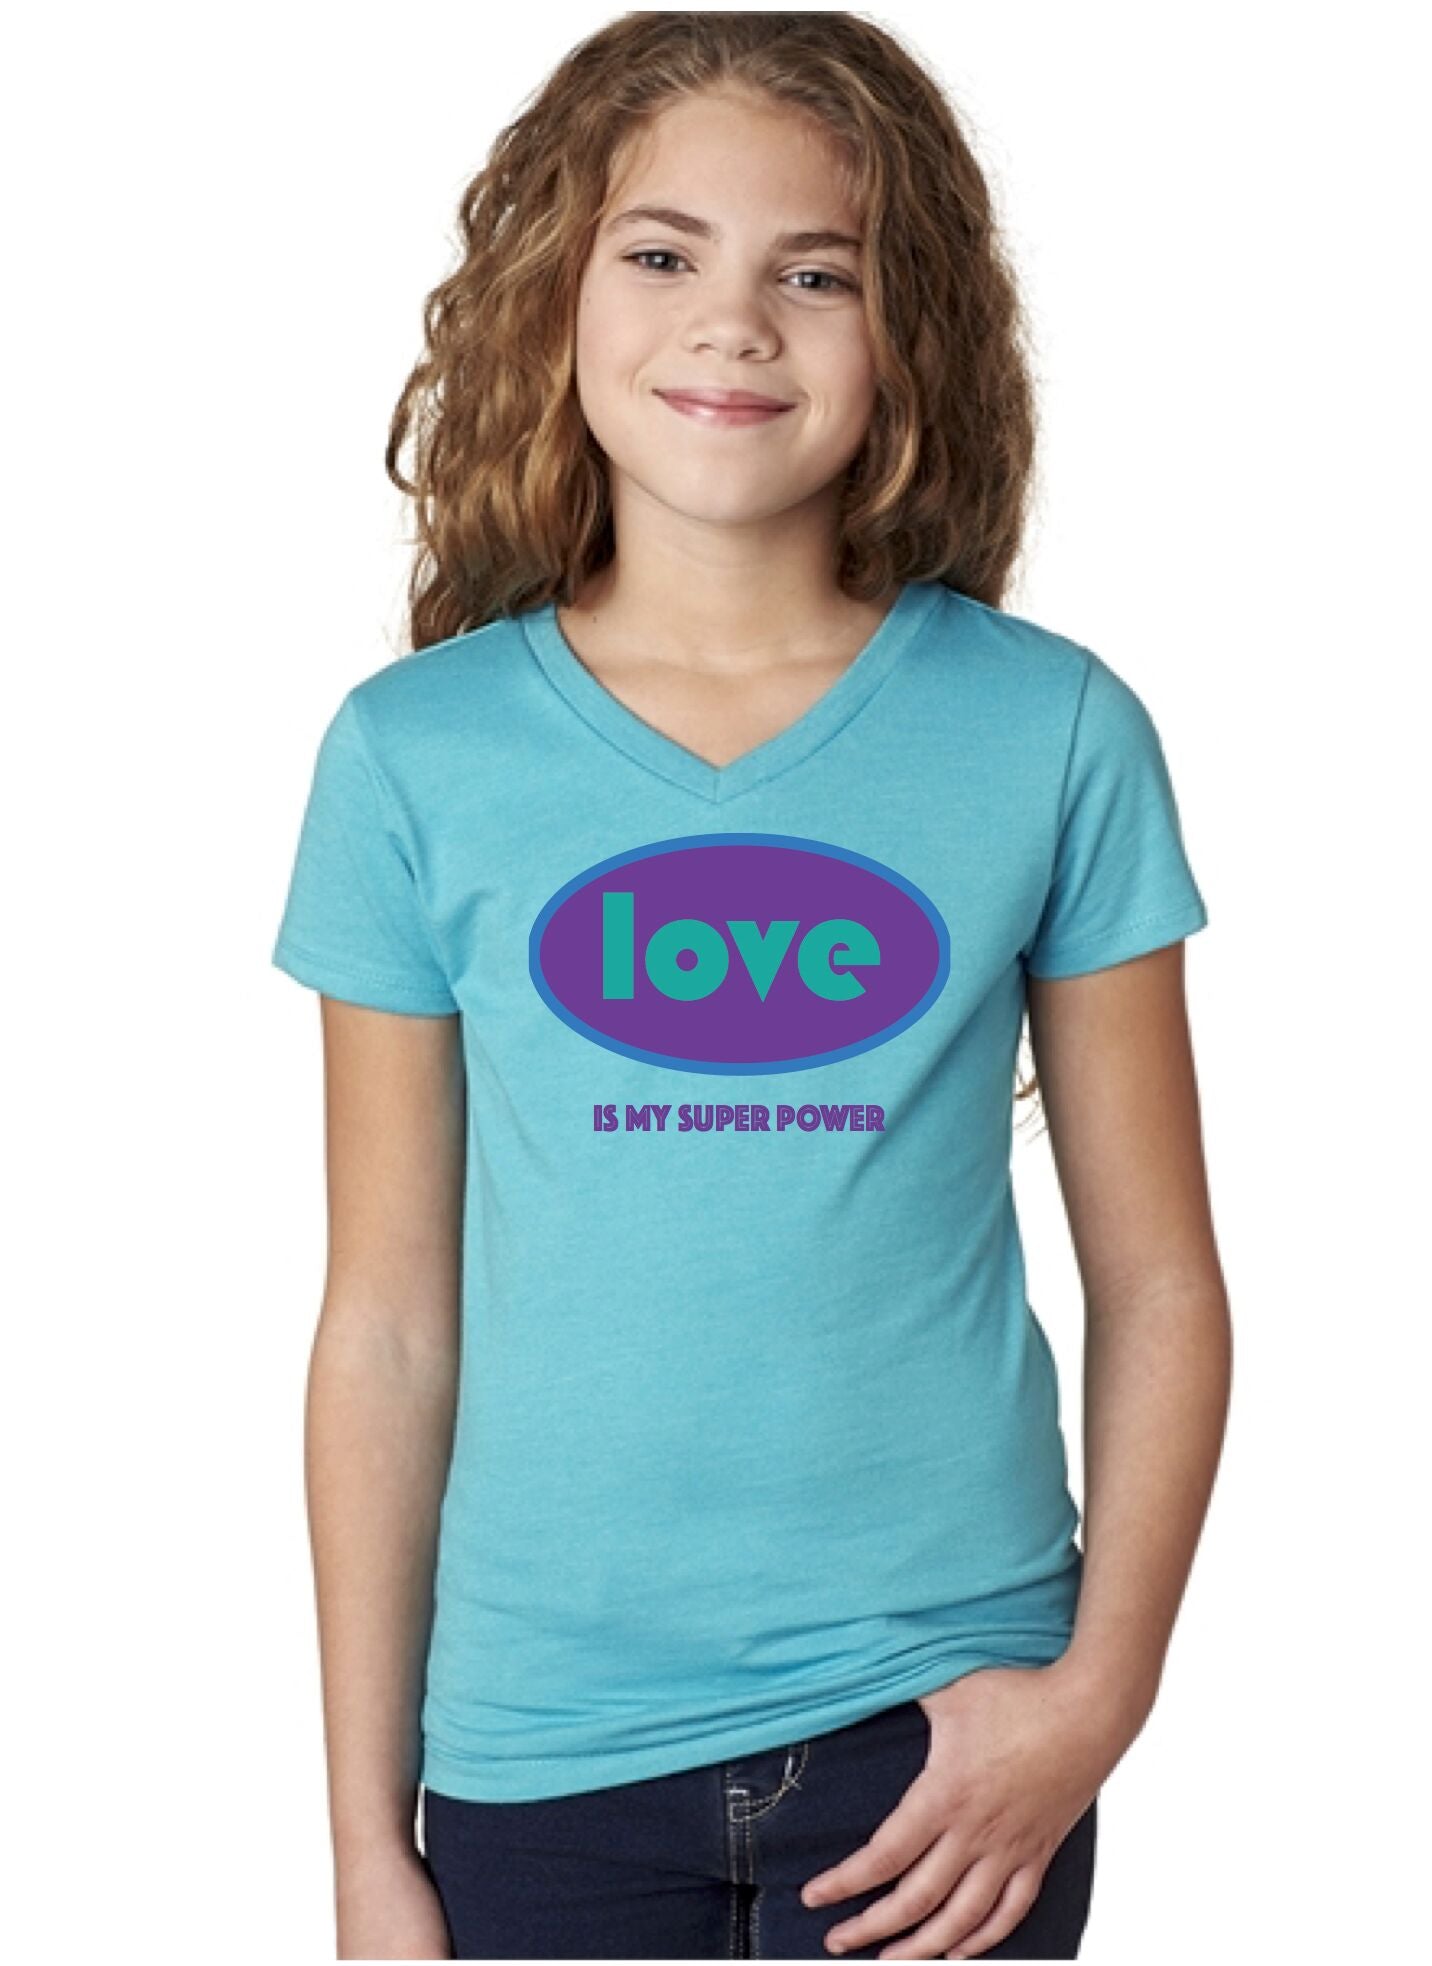 Love is My Superpower Kids Tee (aqua)